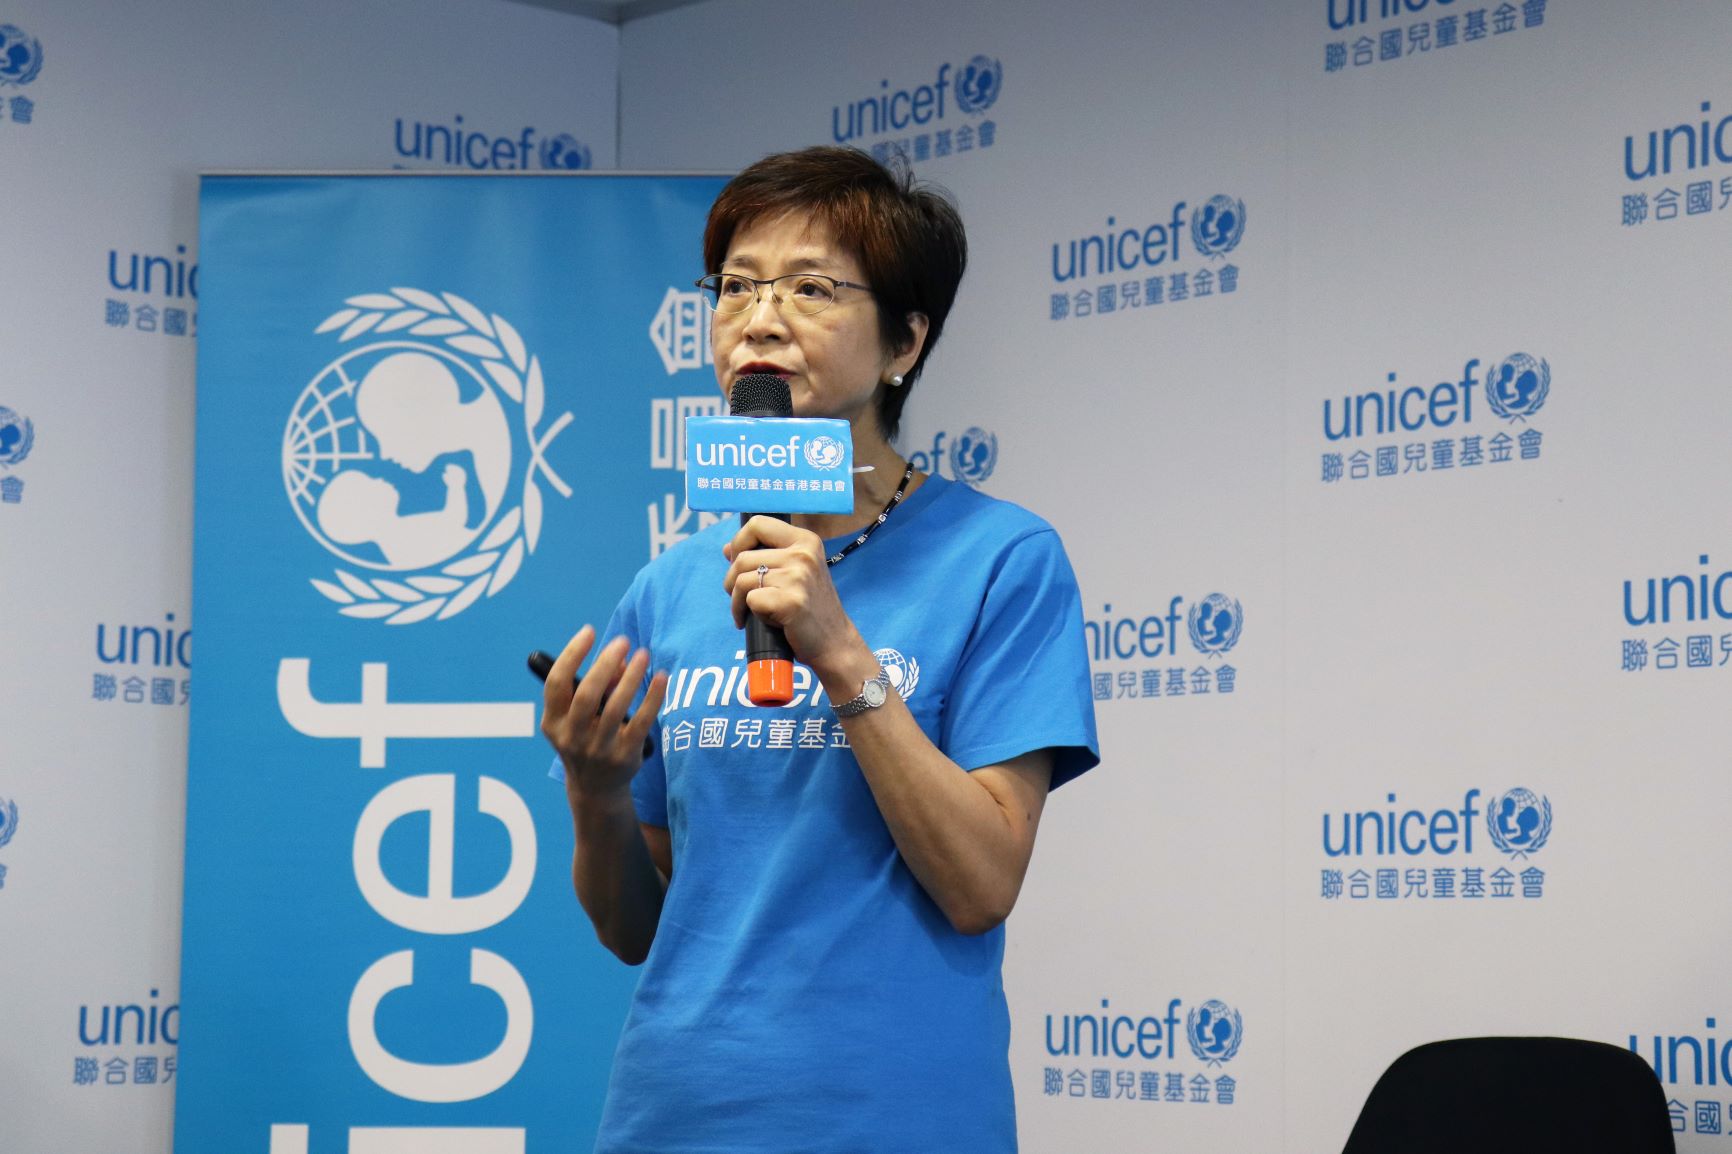 © UNICEF HK/2018